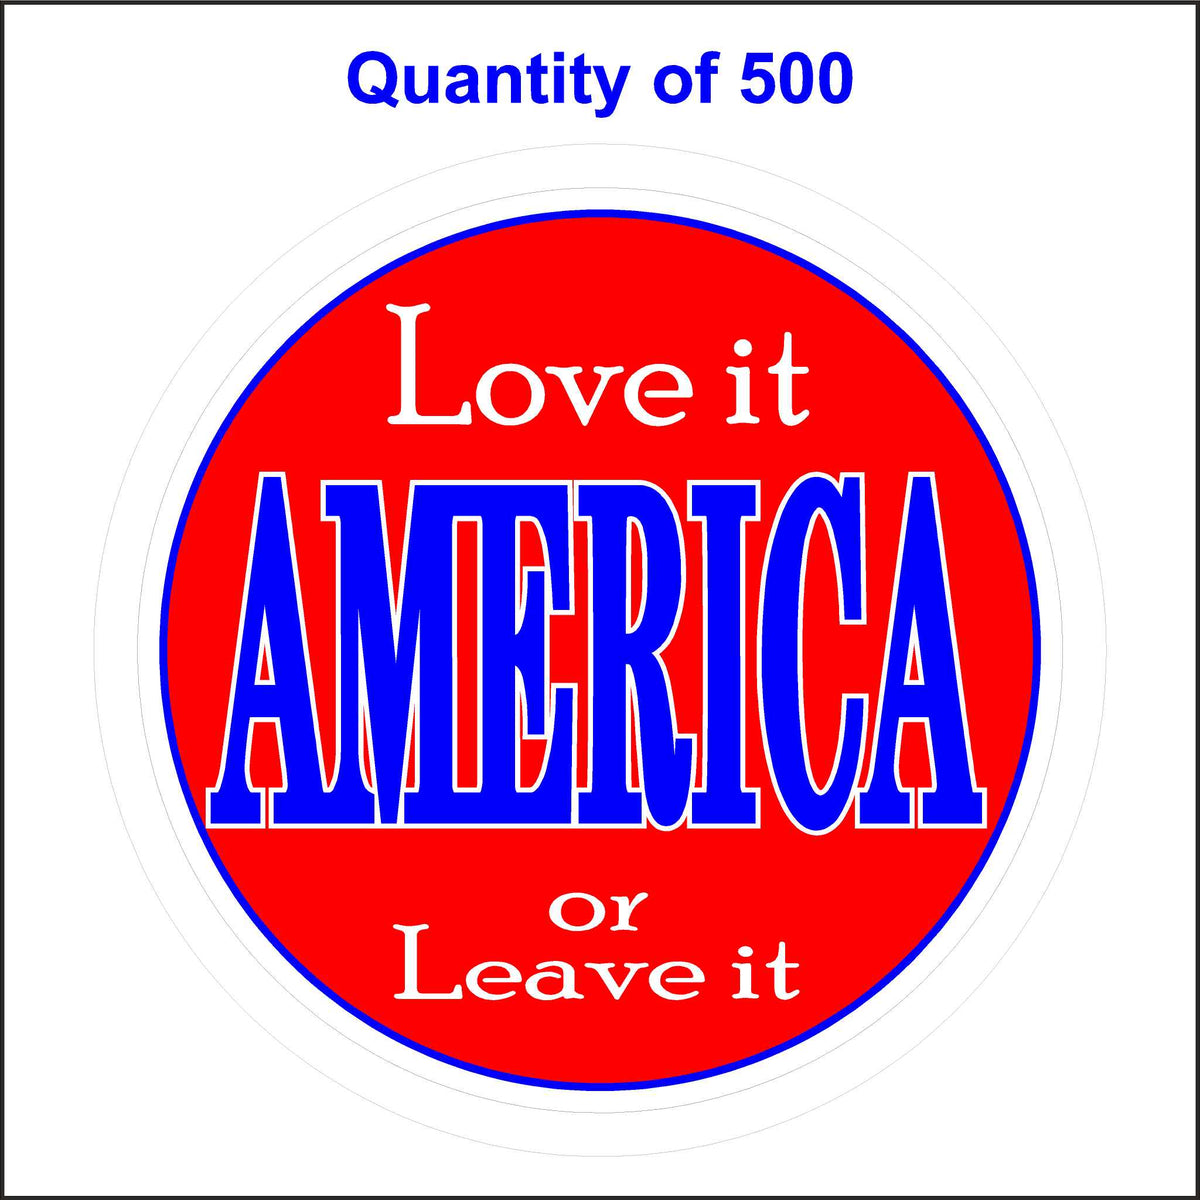 America Love It or Leave It Patriotic Sticker. 500 Quantity.